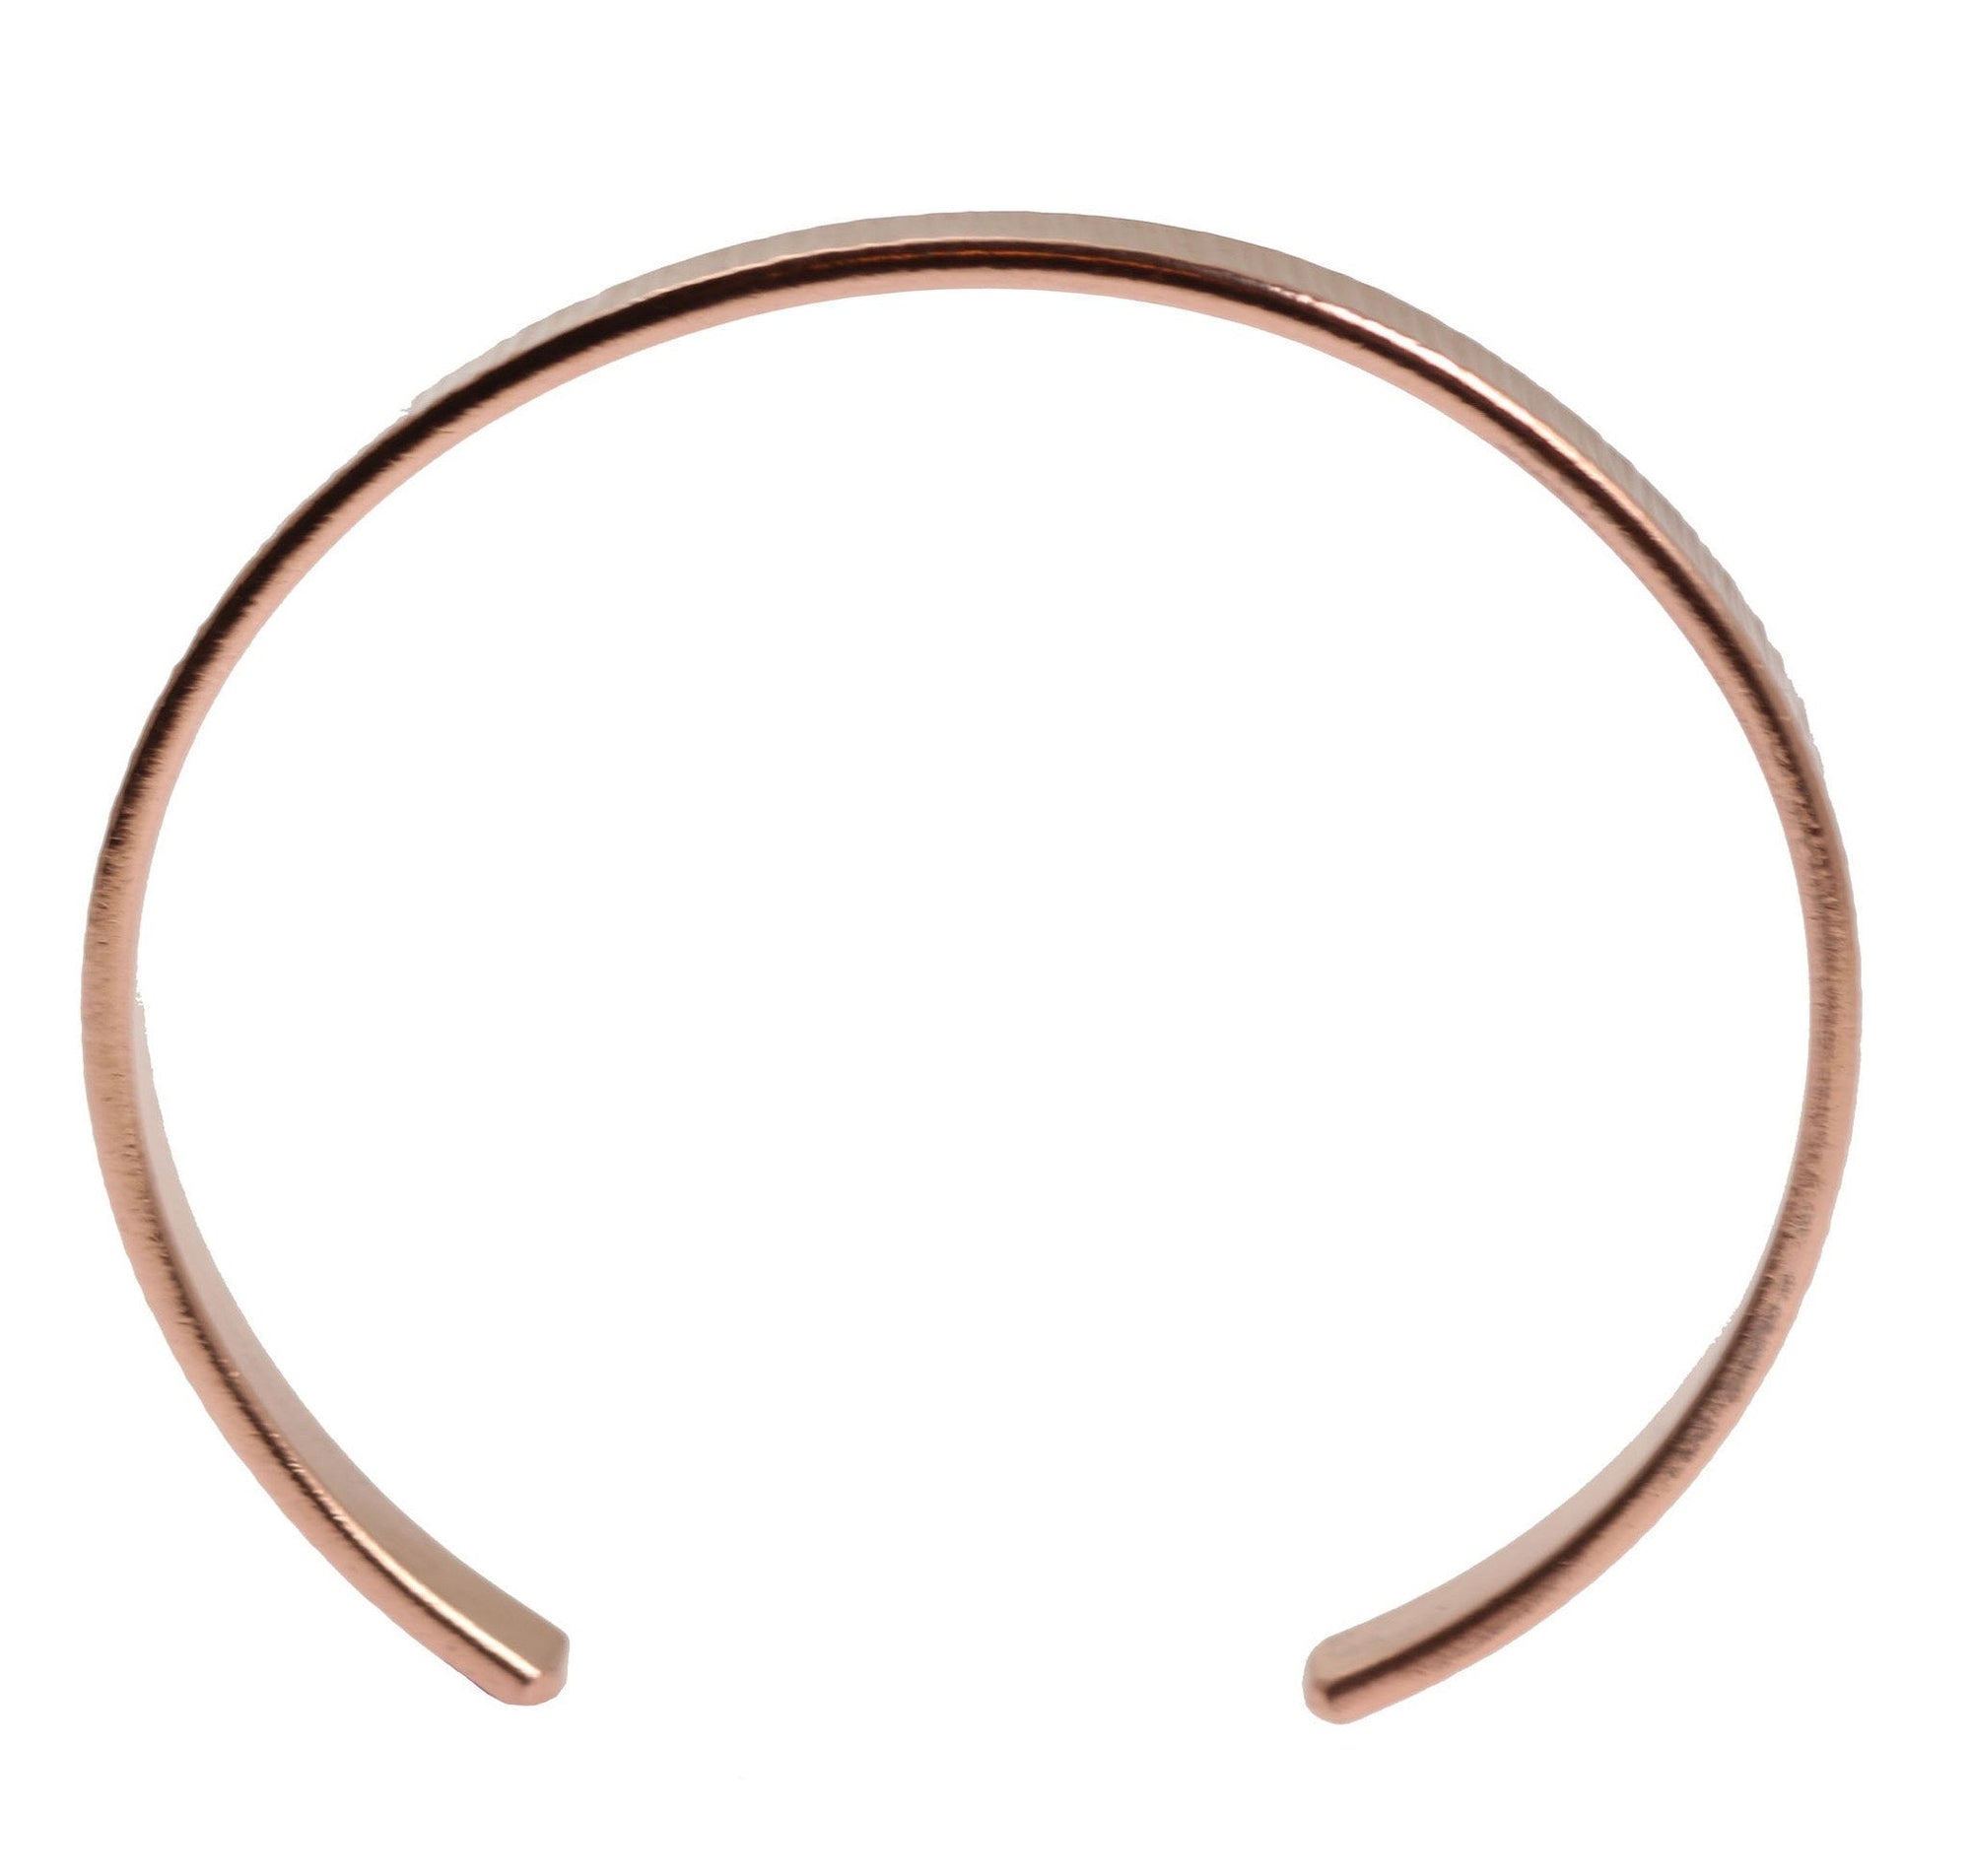 Shape of Men's Thin Chased Copper Cuff Bracelet